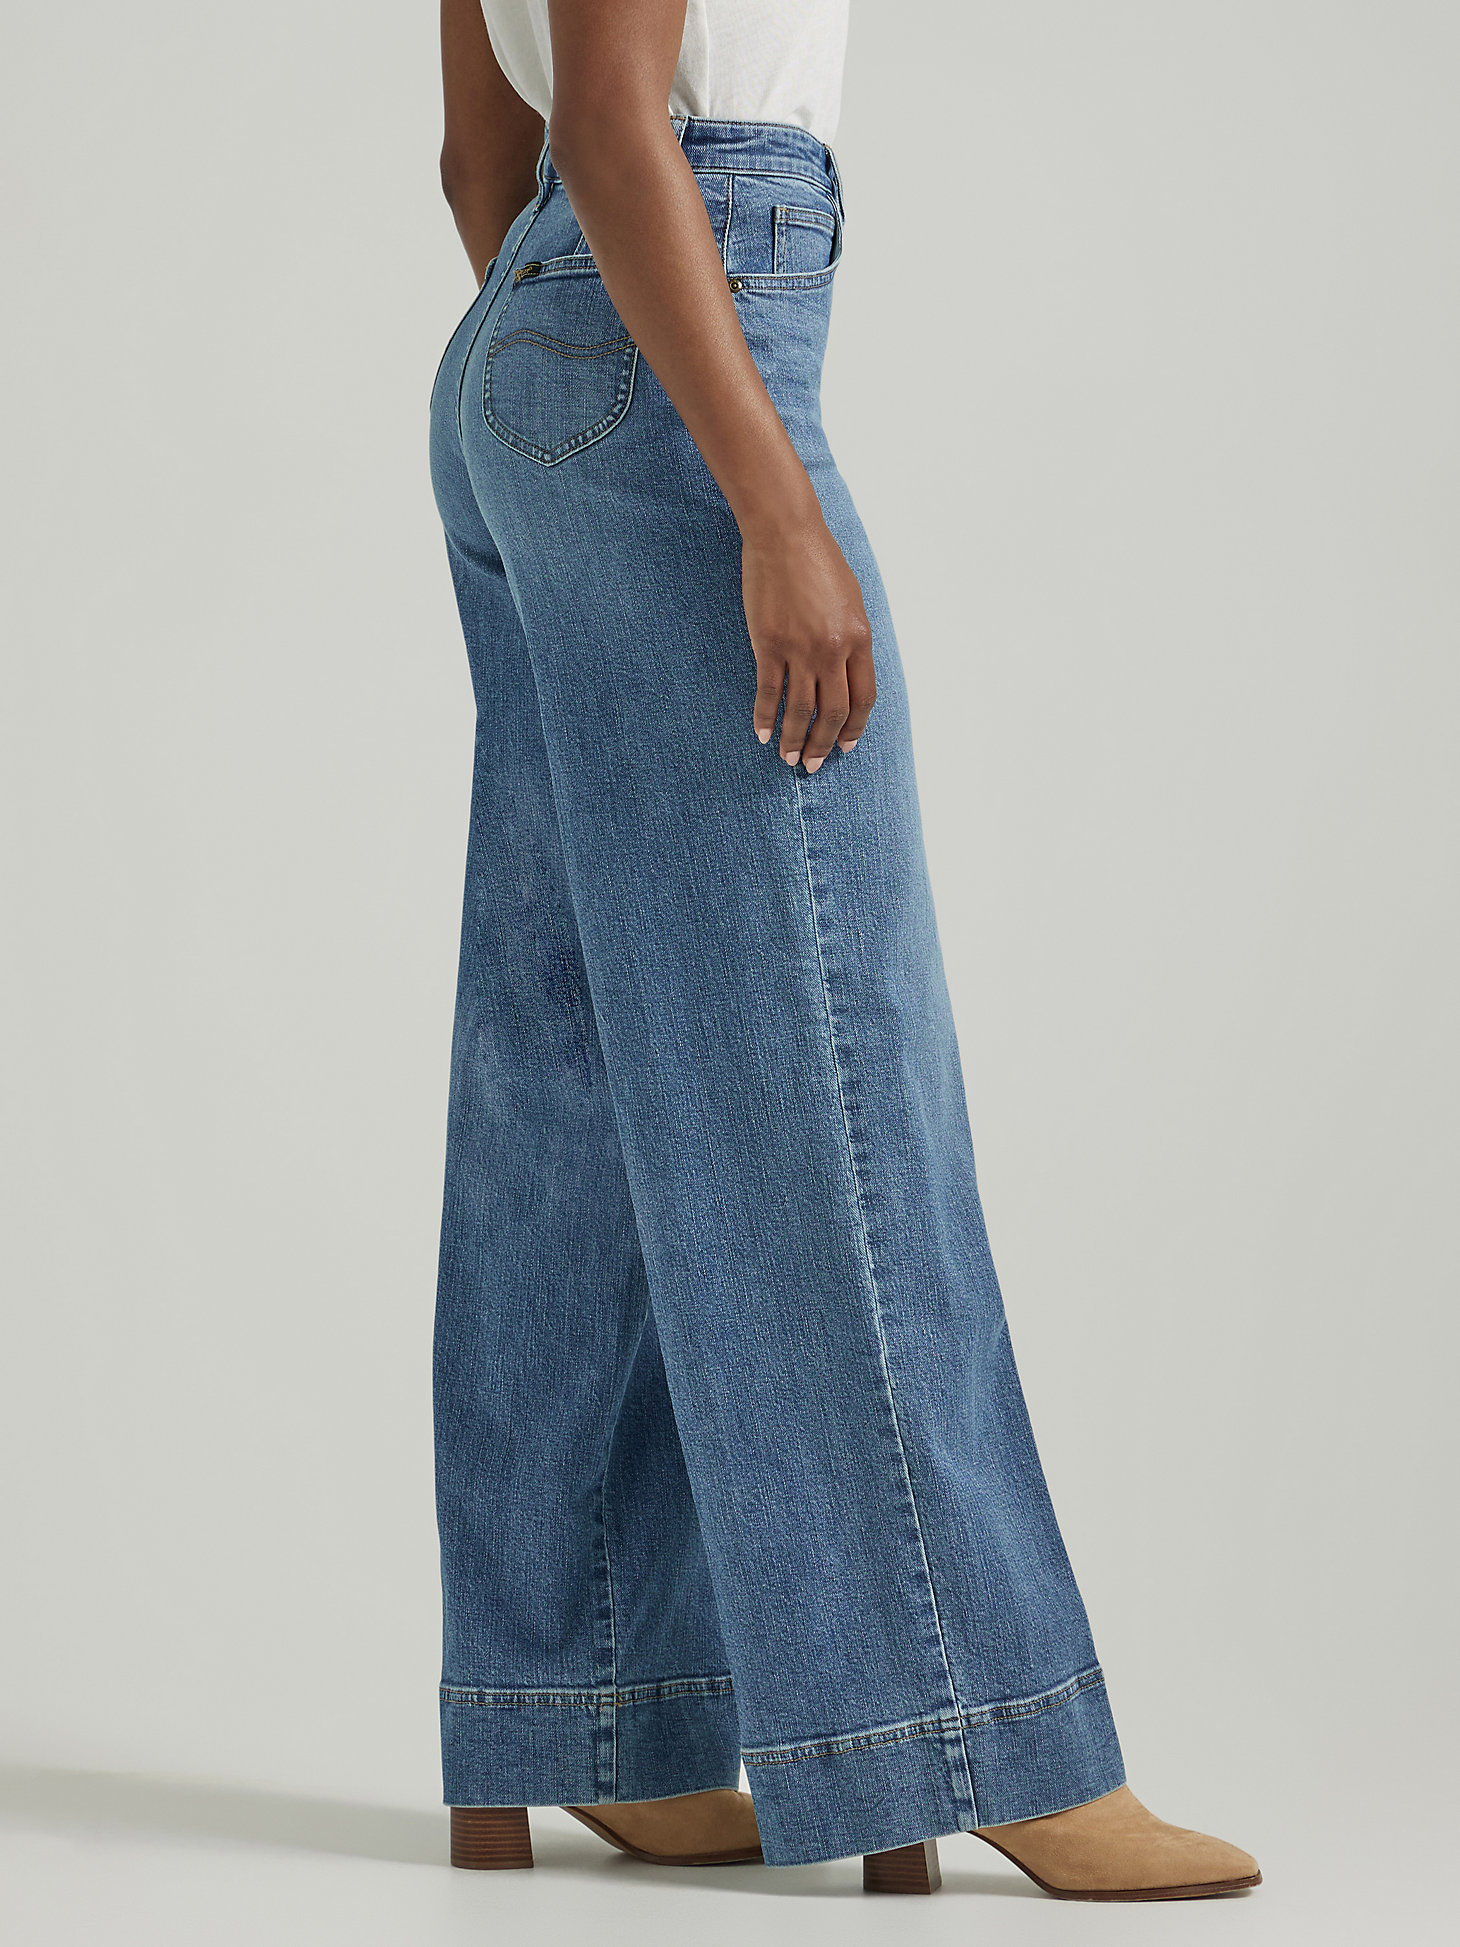 Women's Legendary Trouser Jean in Elevated Retro Blue alternative view 3